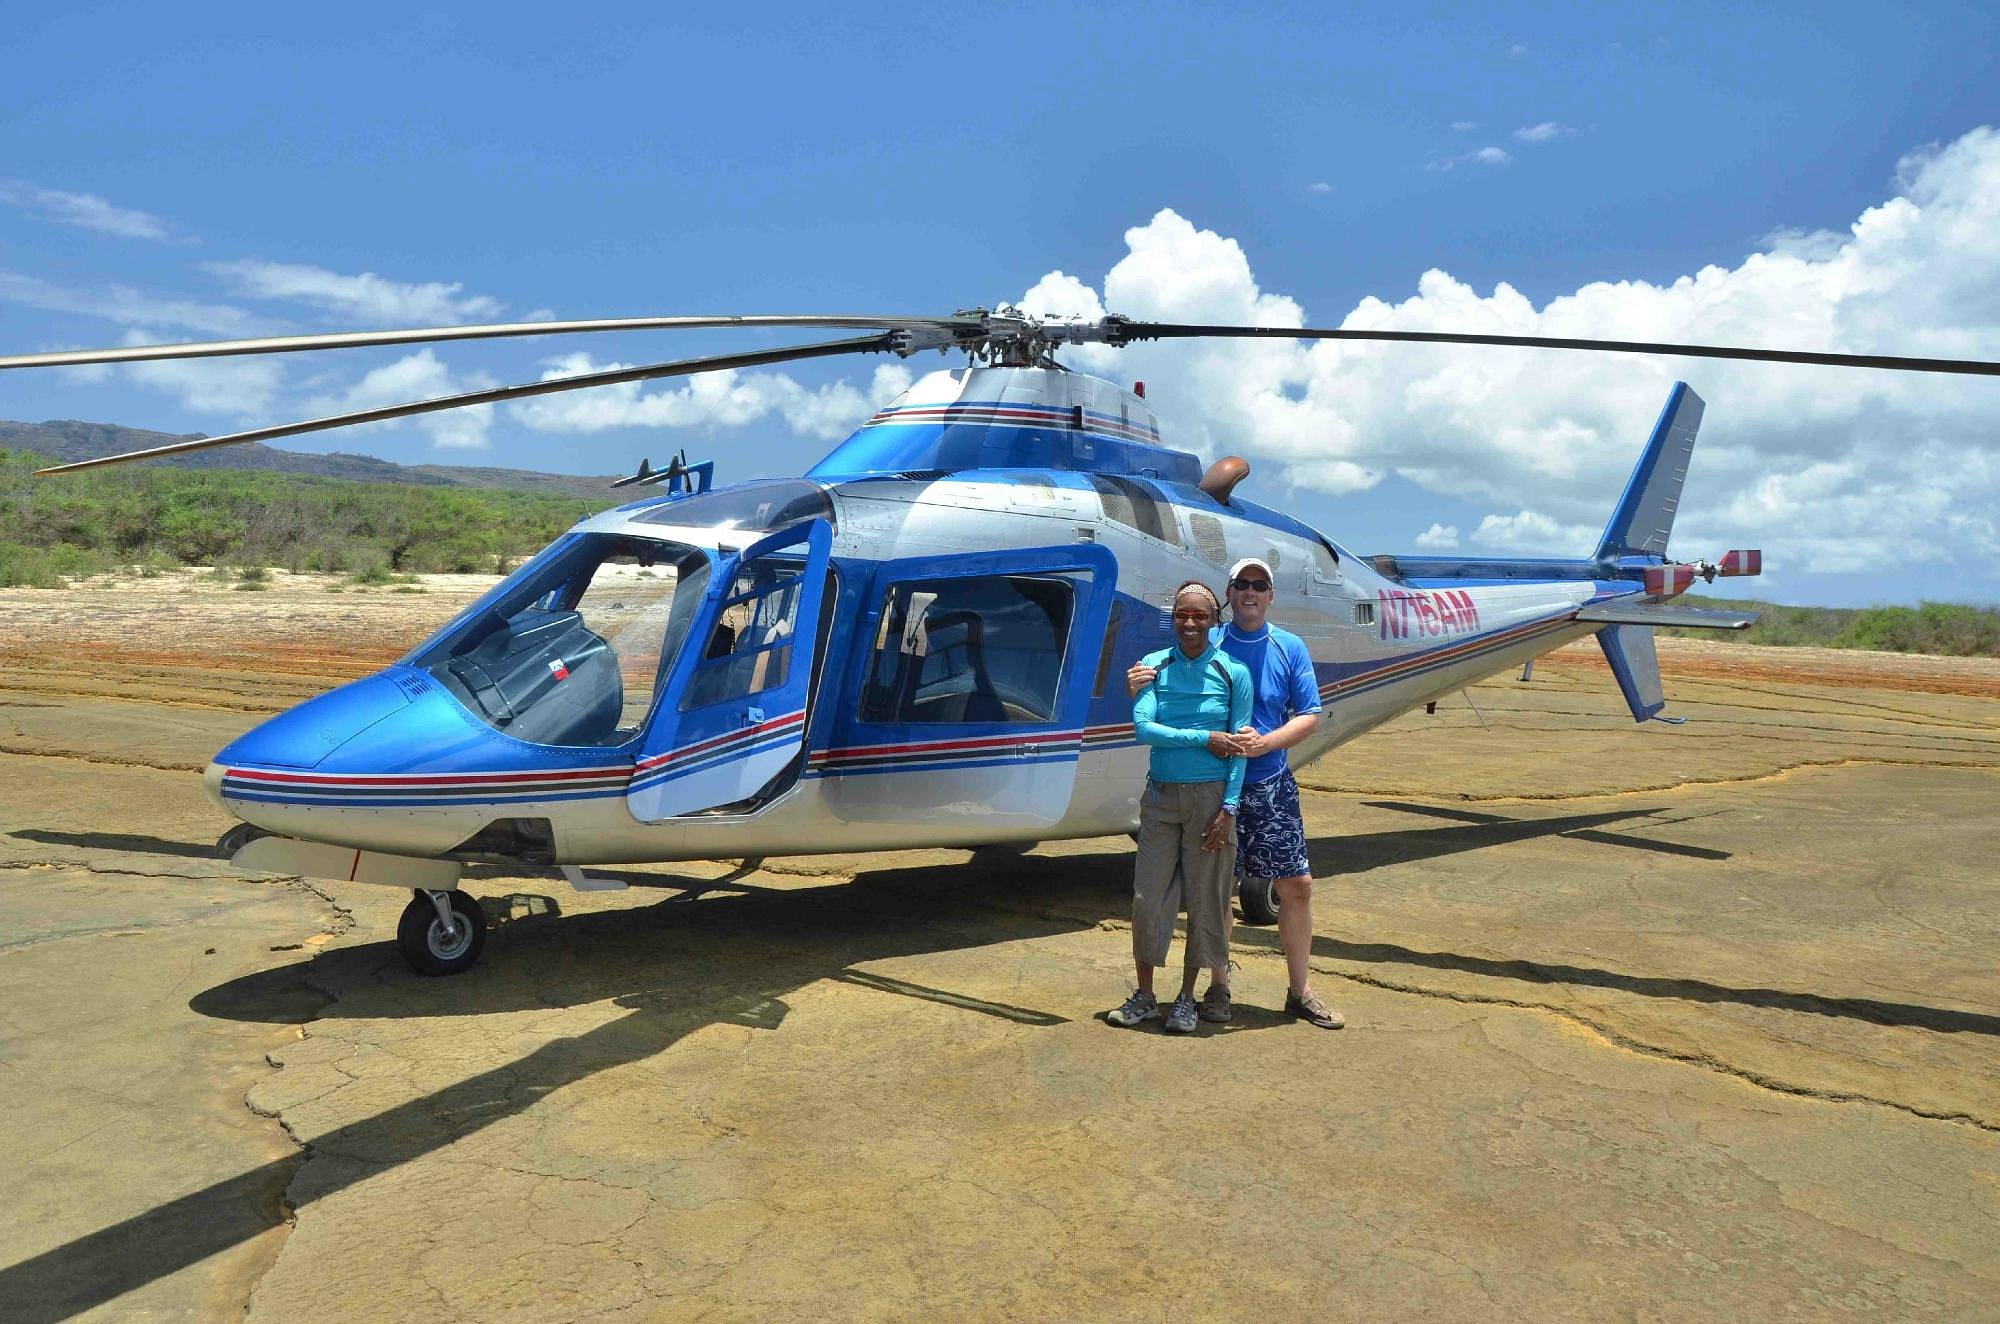 niihau island helicopter tour